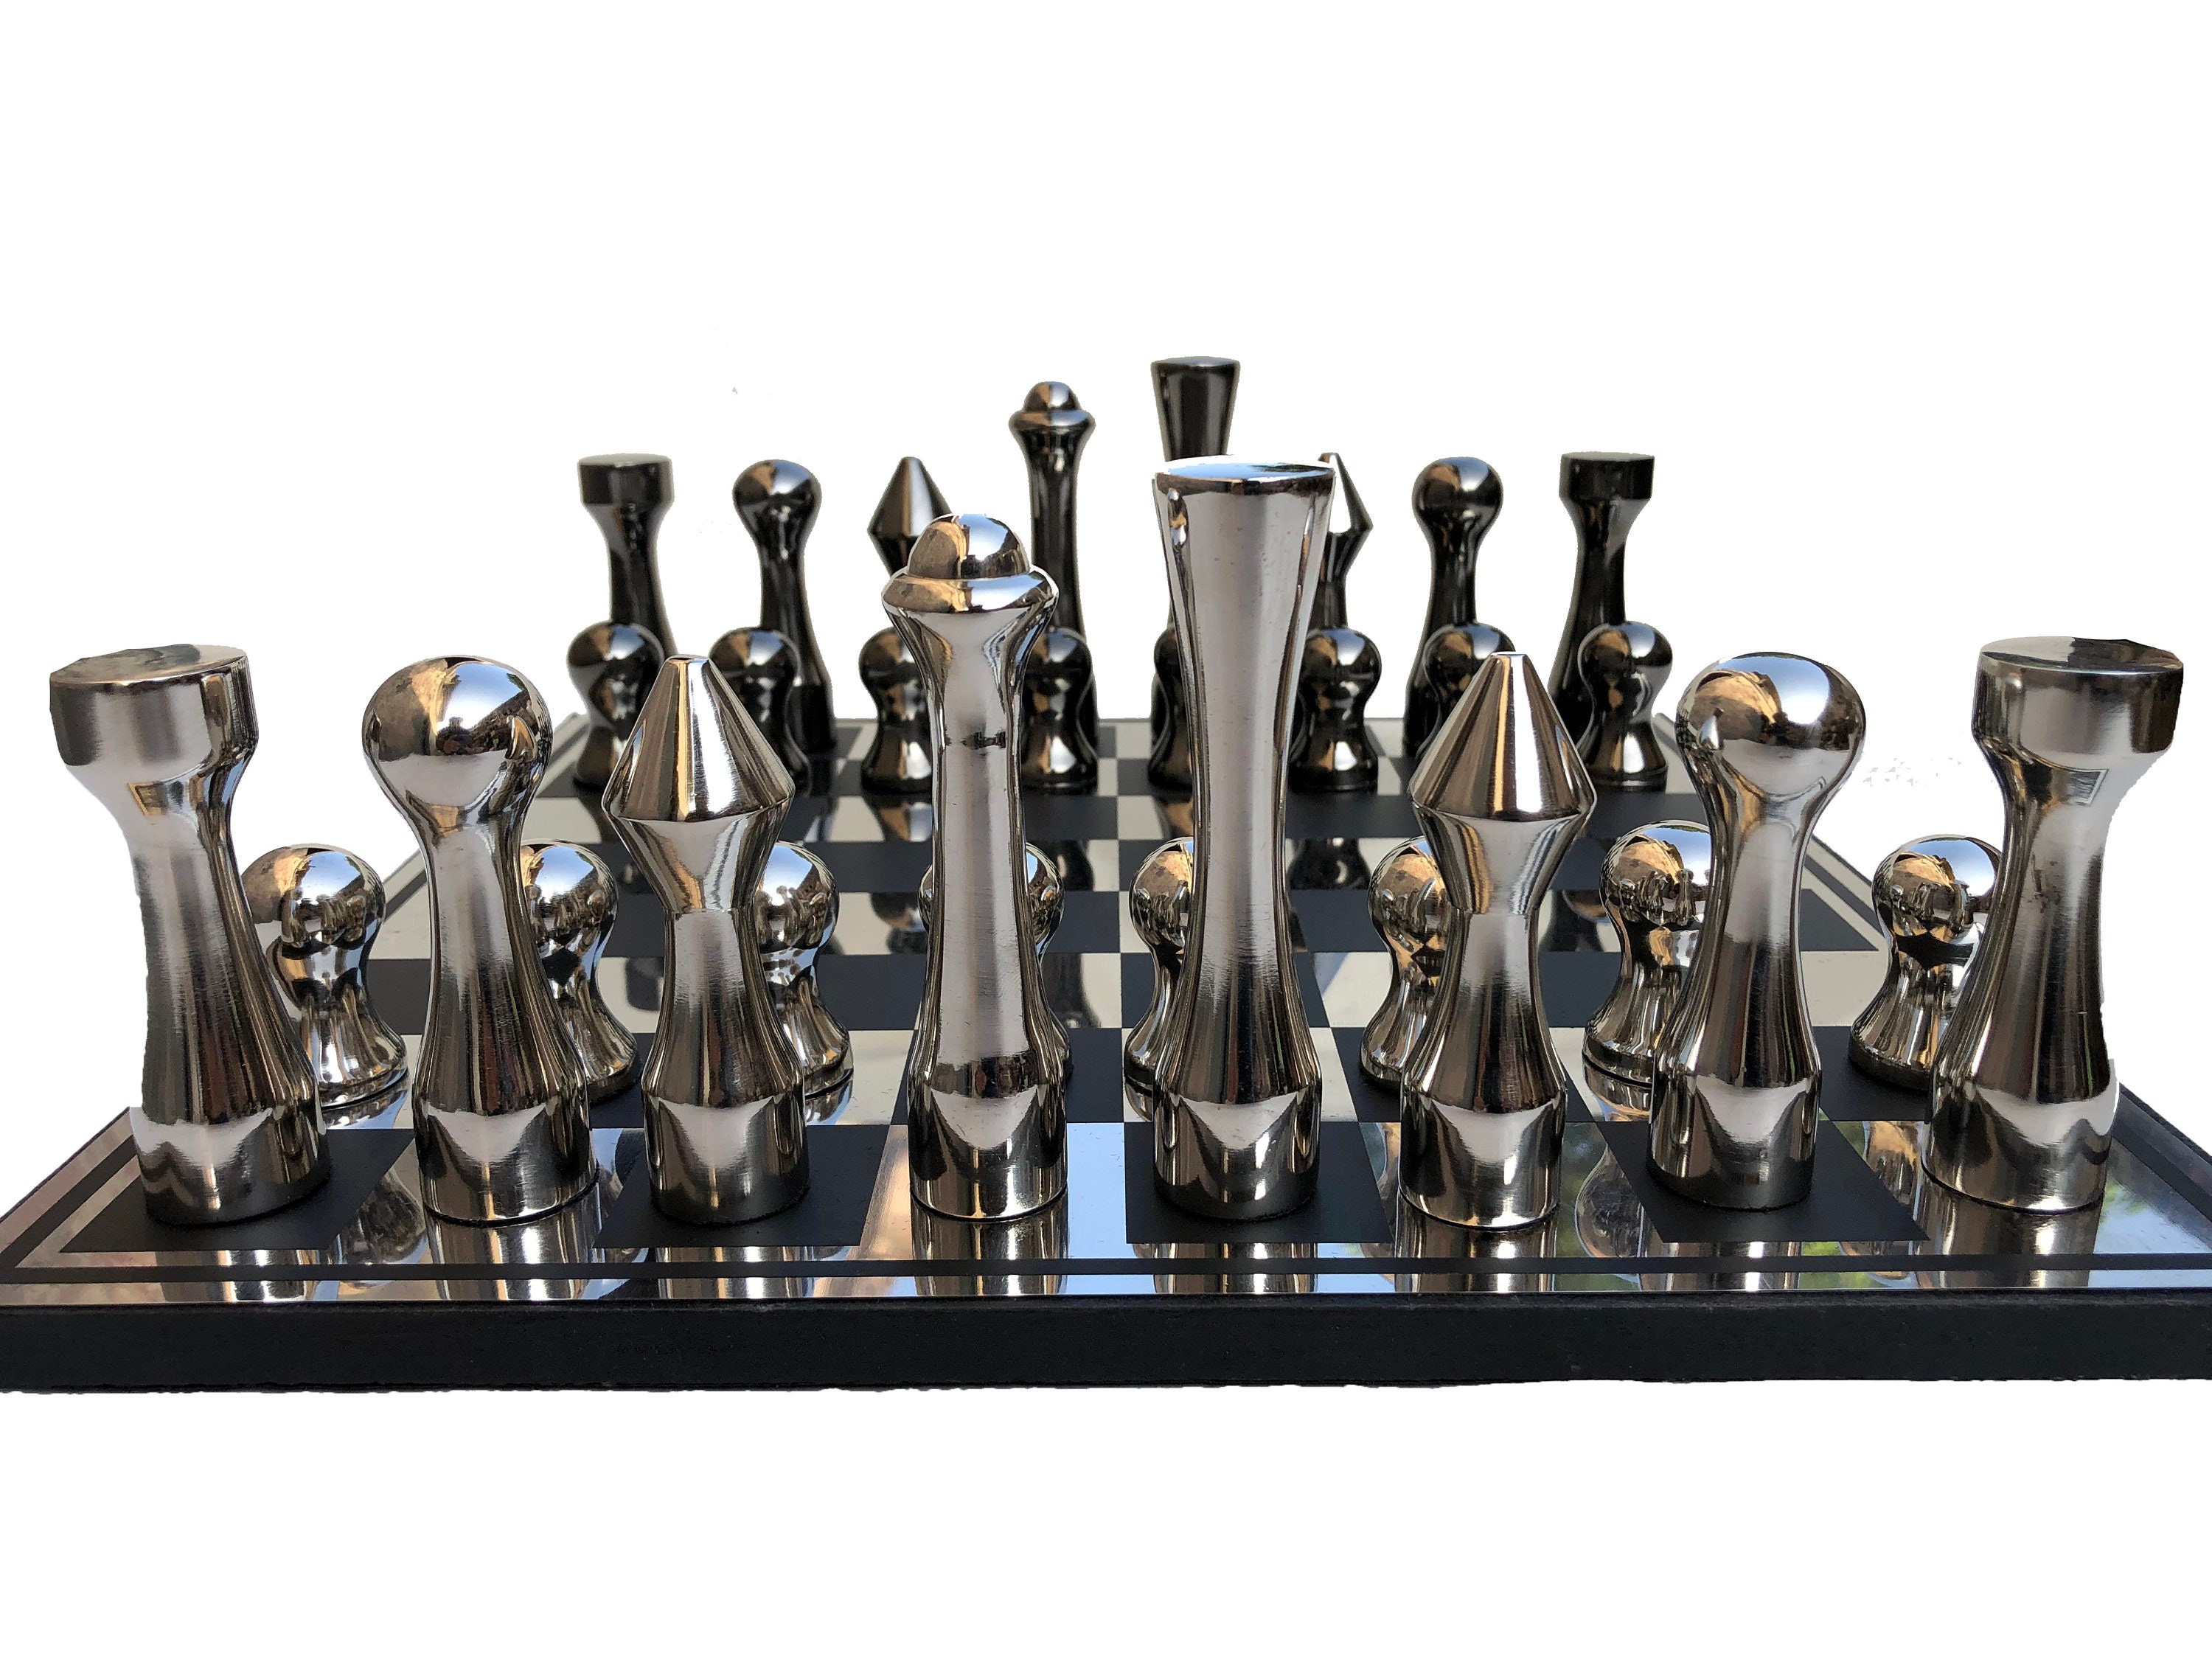 14 ART DECO Metal Chess Board Set Designer King 4 -  UK